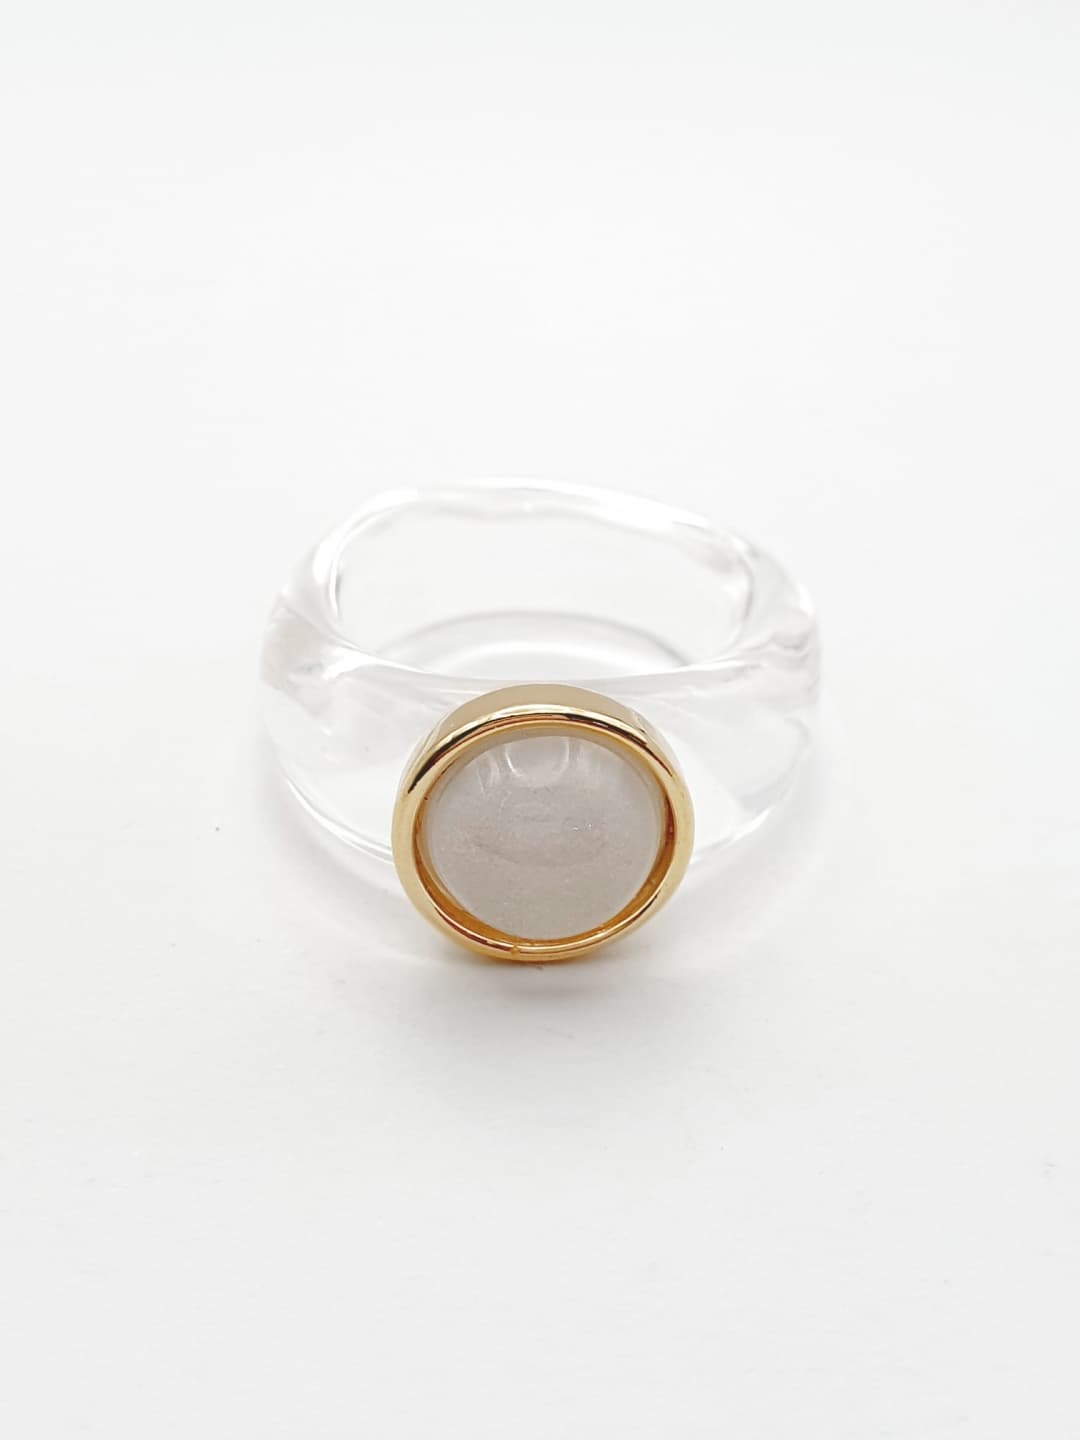 Ring Rings Korean Wholesale Fashion Jewelry Accessory Market  No_10111300